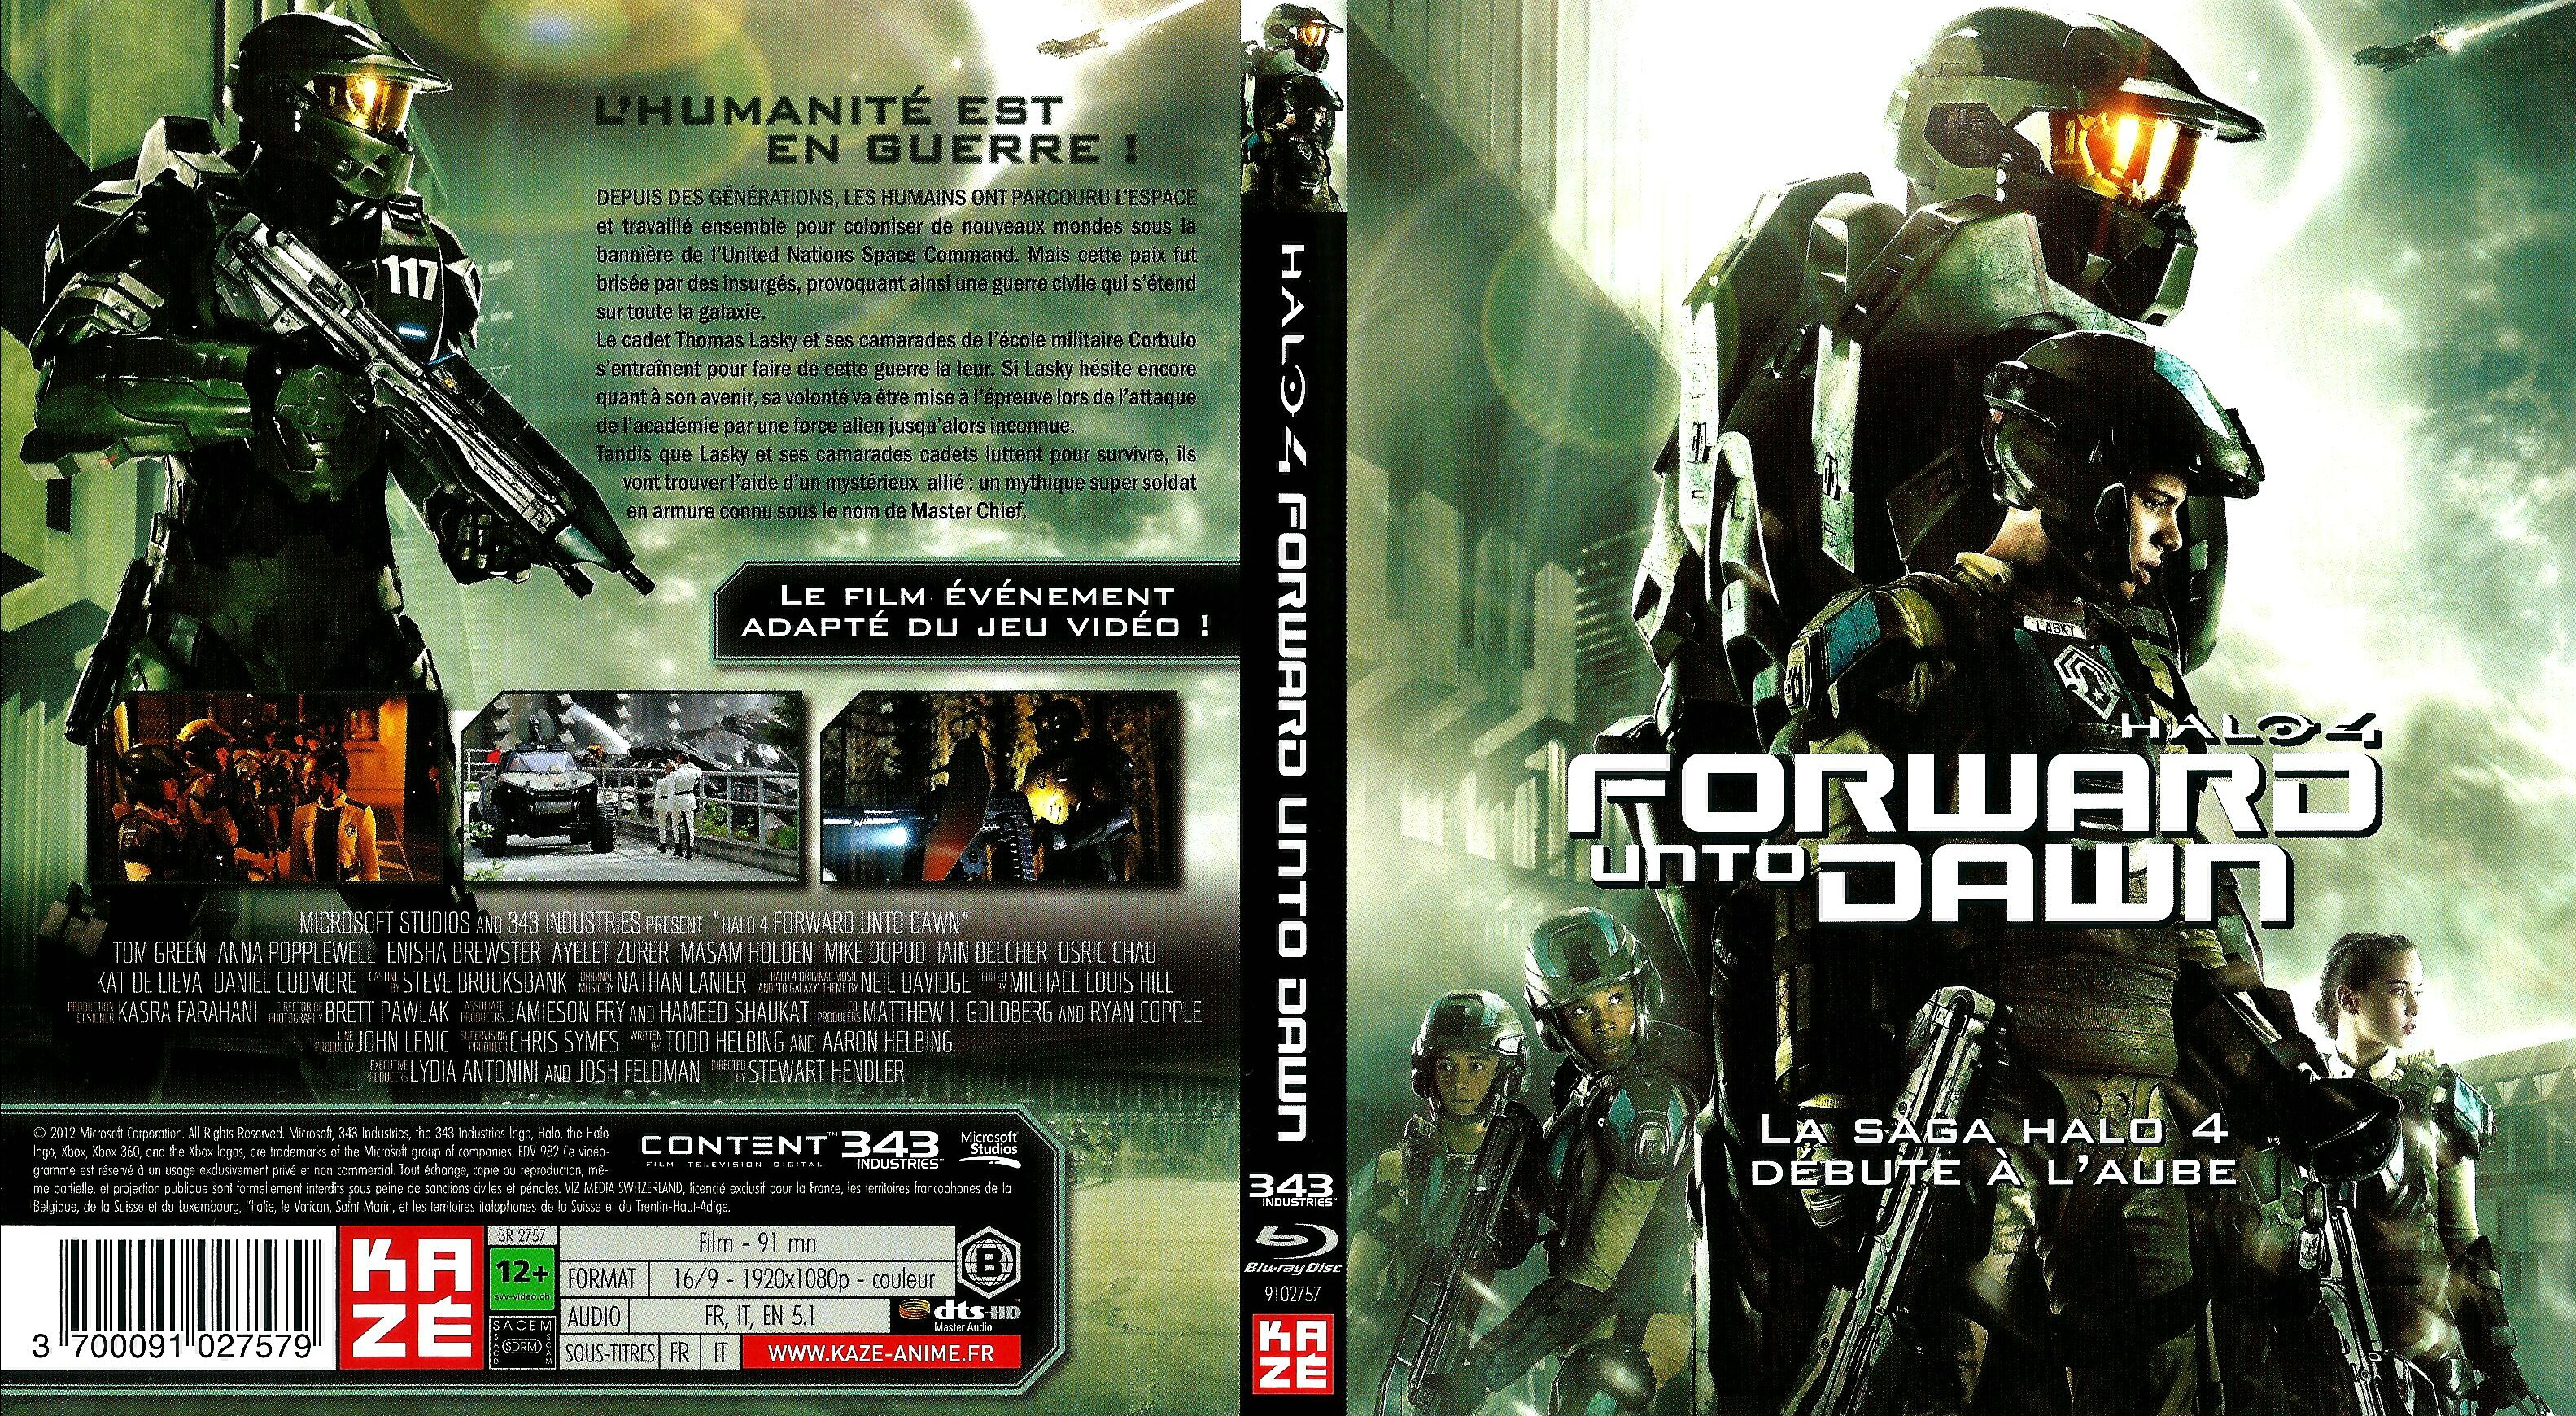 Jaquette DVD Halo 4 forward unto dawn (BLU-RAY) 